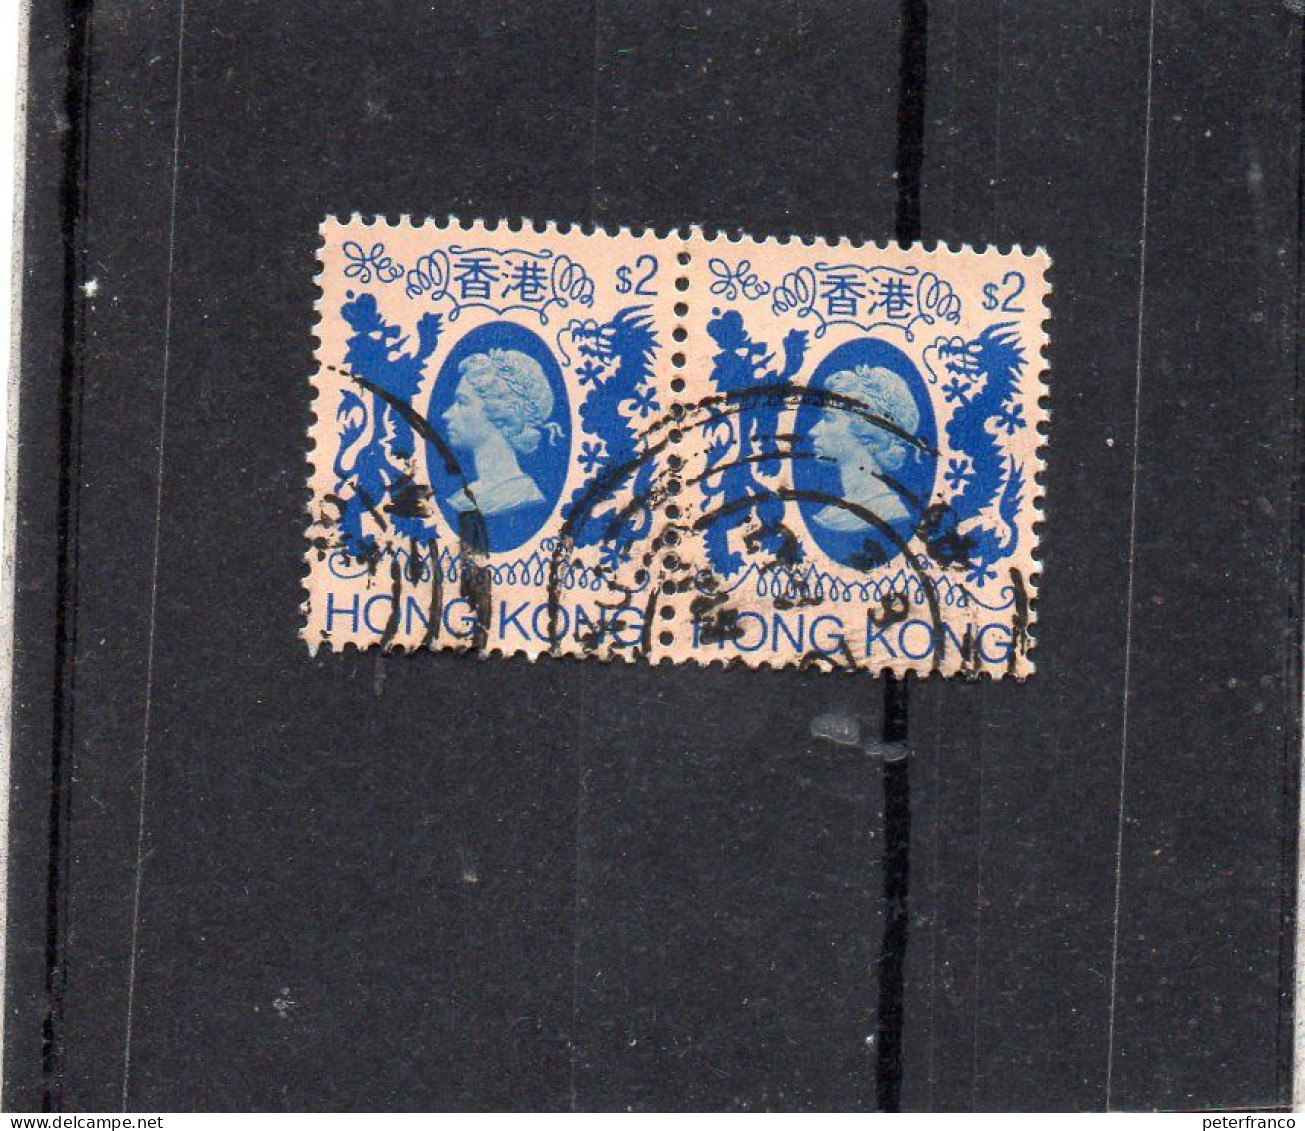 1982 Hong Kong - Queen Elizabeth - Used Stamps